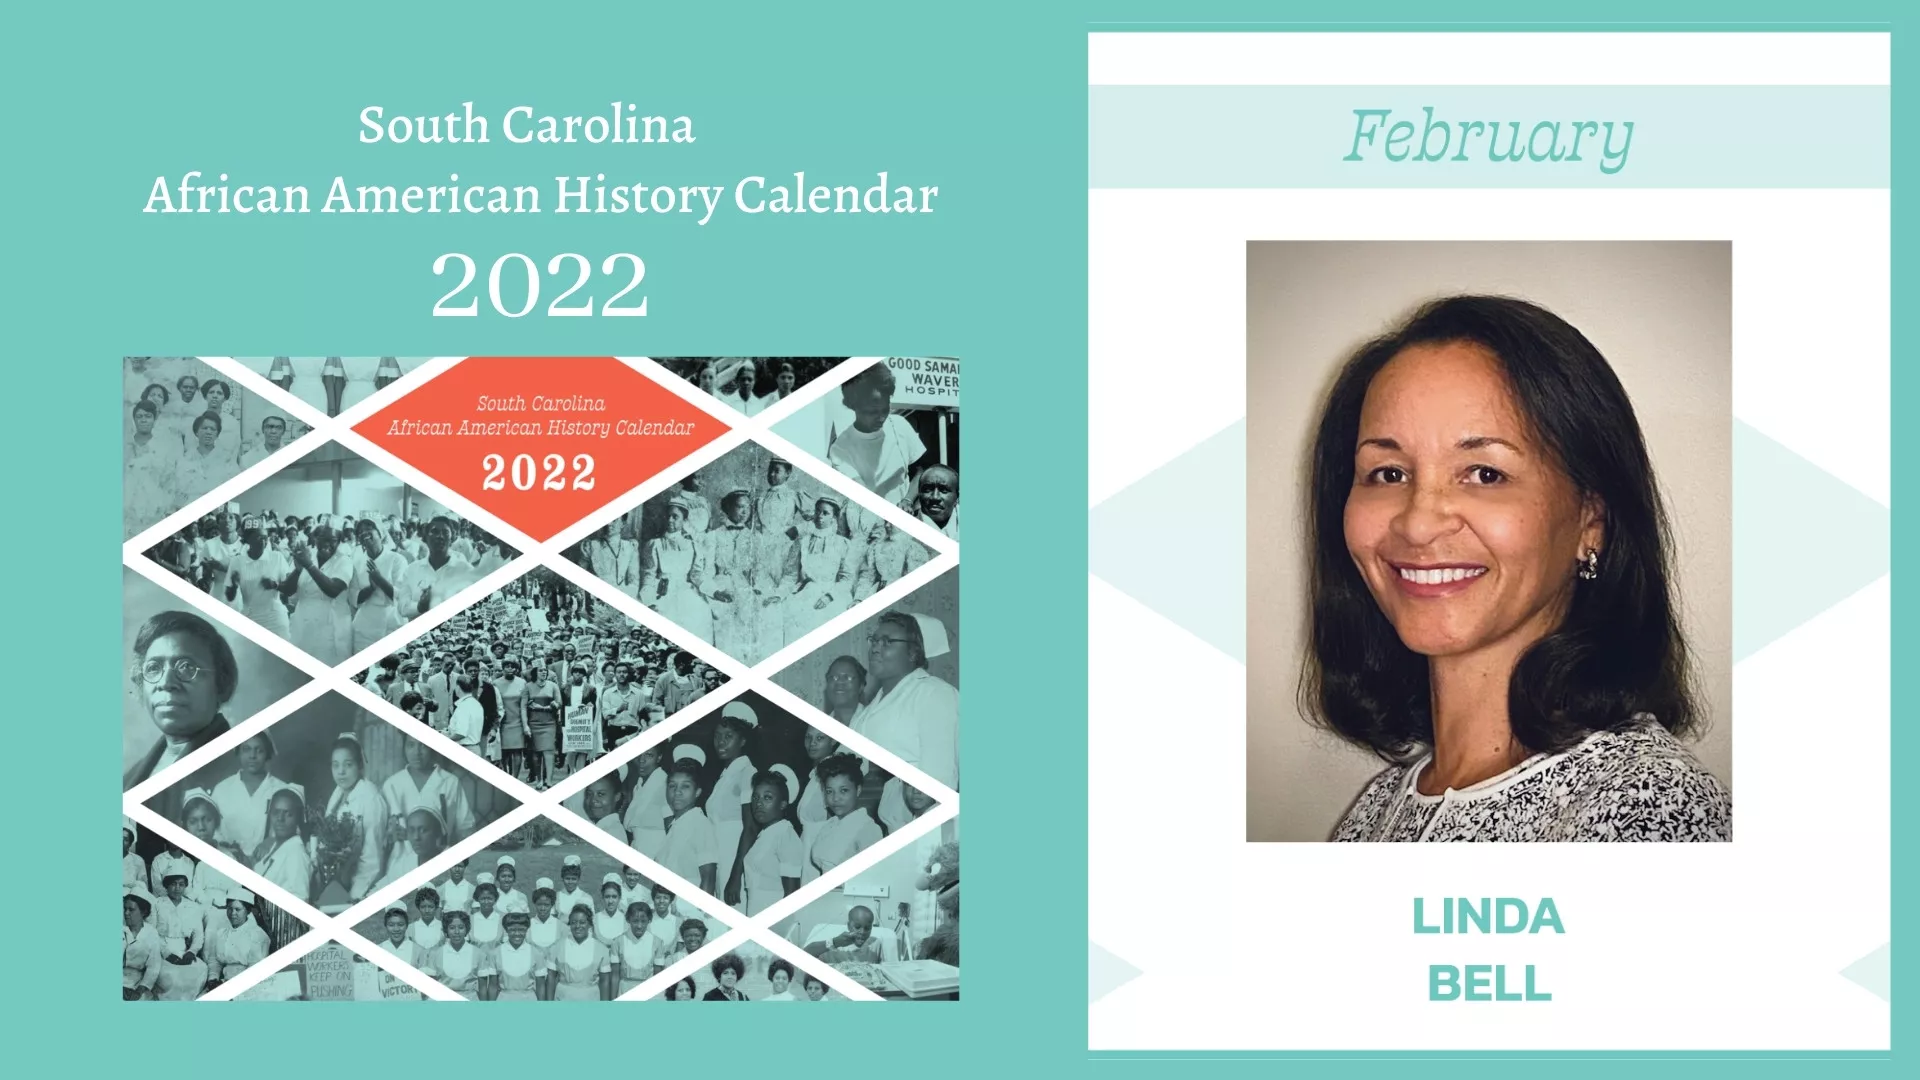 SC African American History Calendar February 2022 Honoree - Dr. Linda Bell